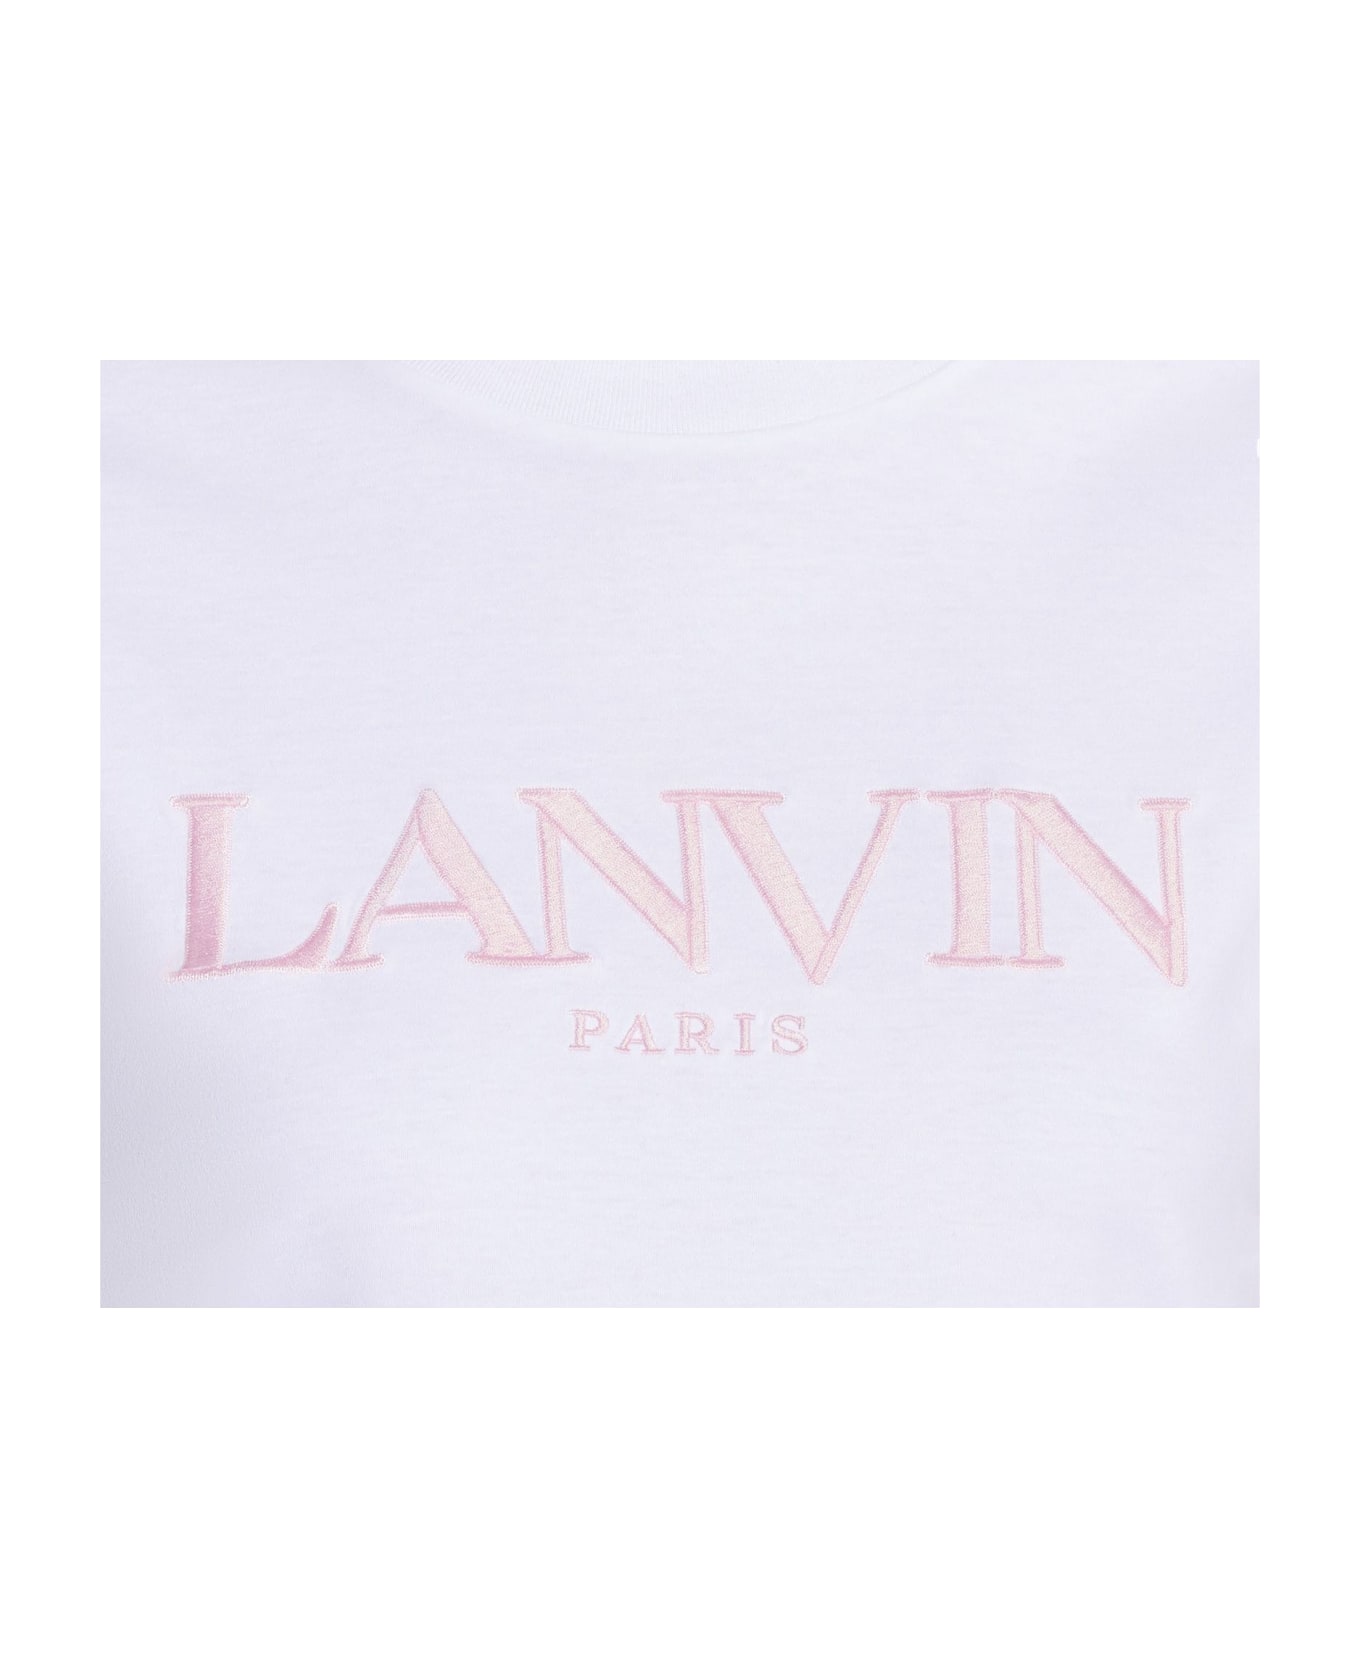 Lanvin White Cotton T-shirt - White